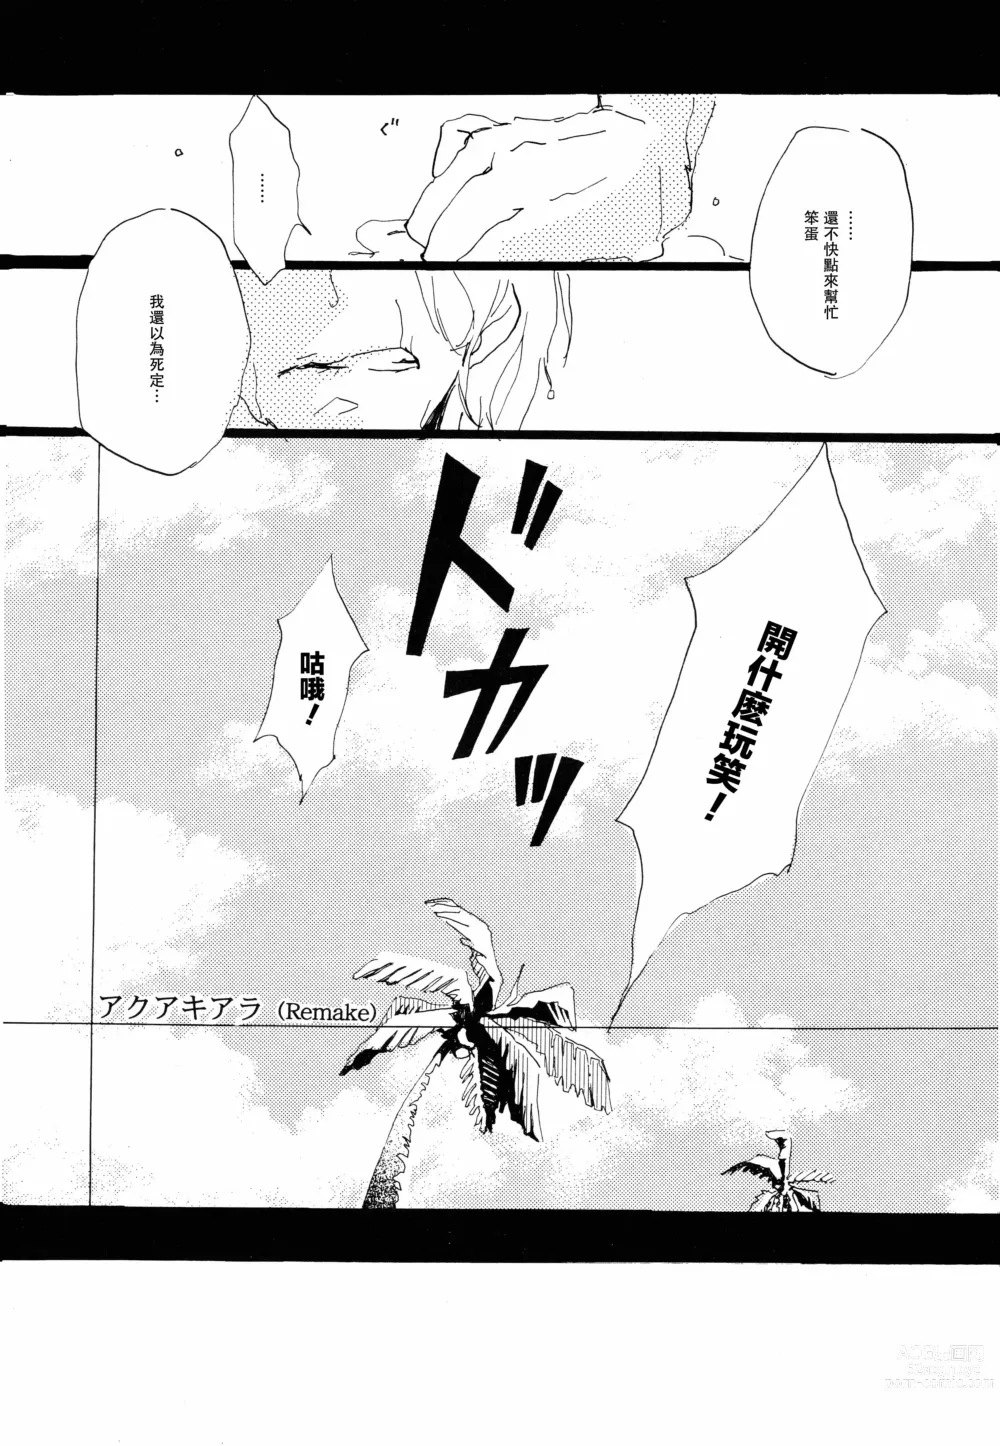 Page 4 of doujinshi Aquakiara